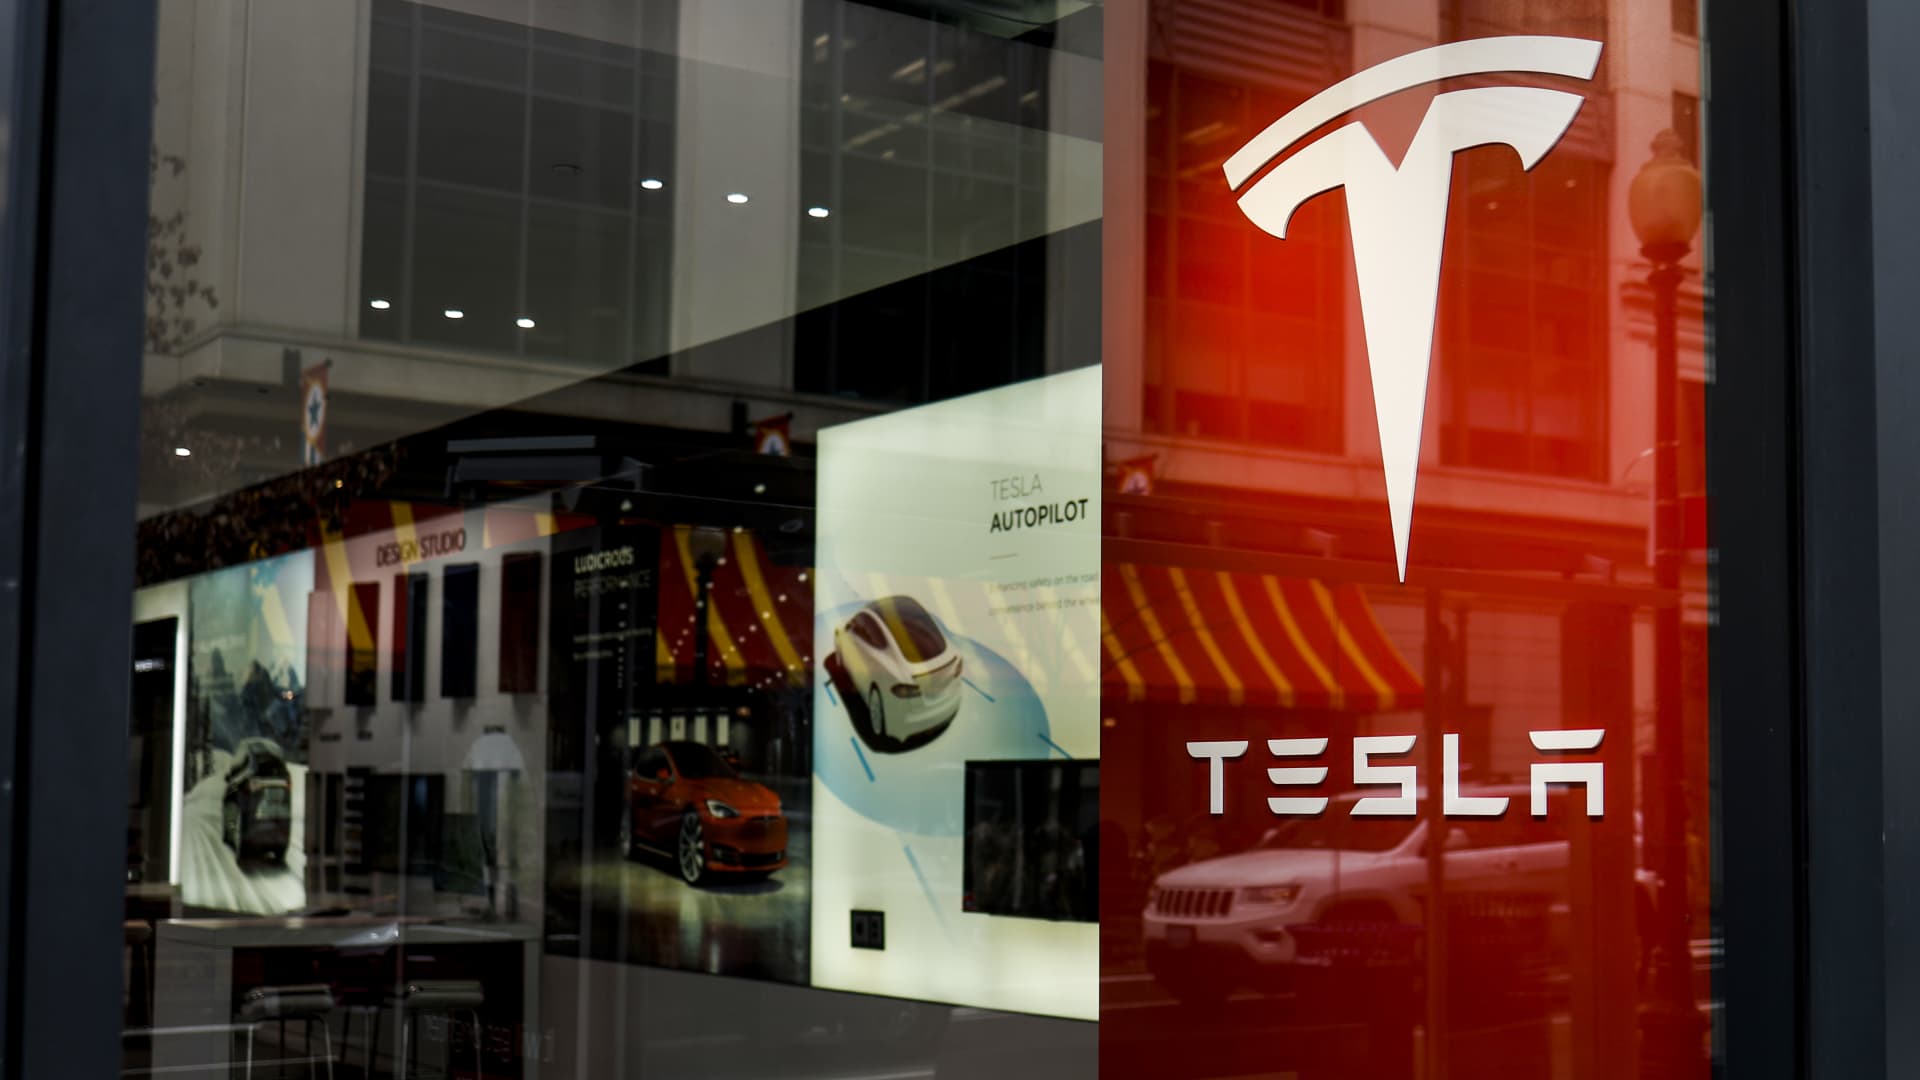 Tesla’s price cuts could spur an EV pricing war